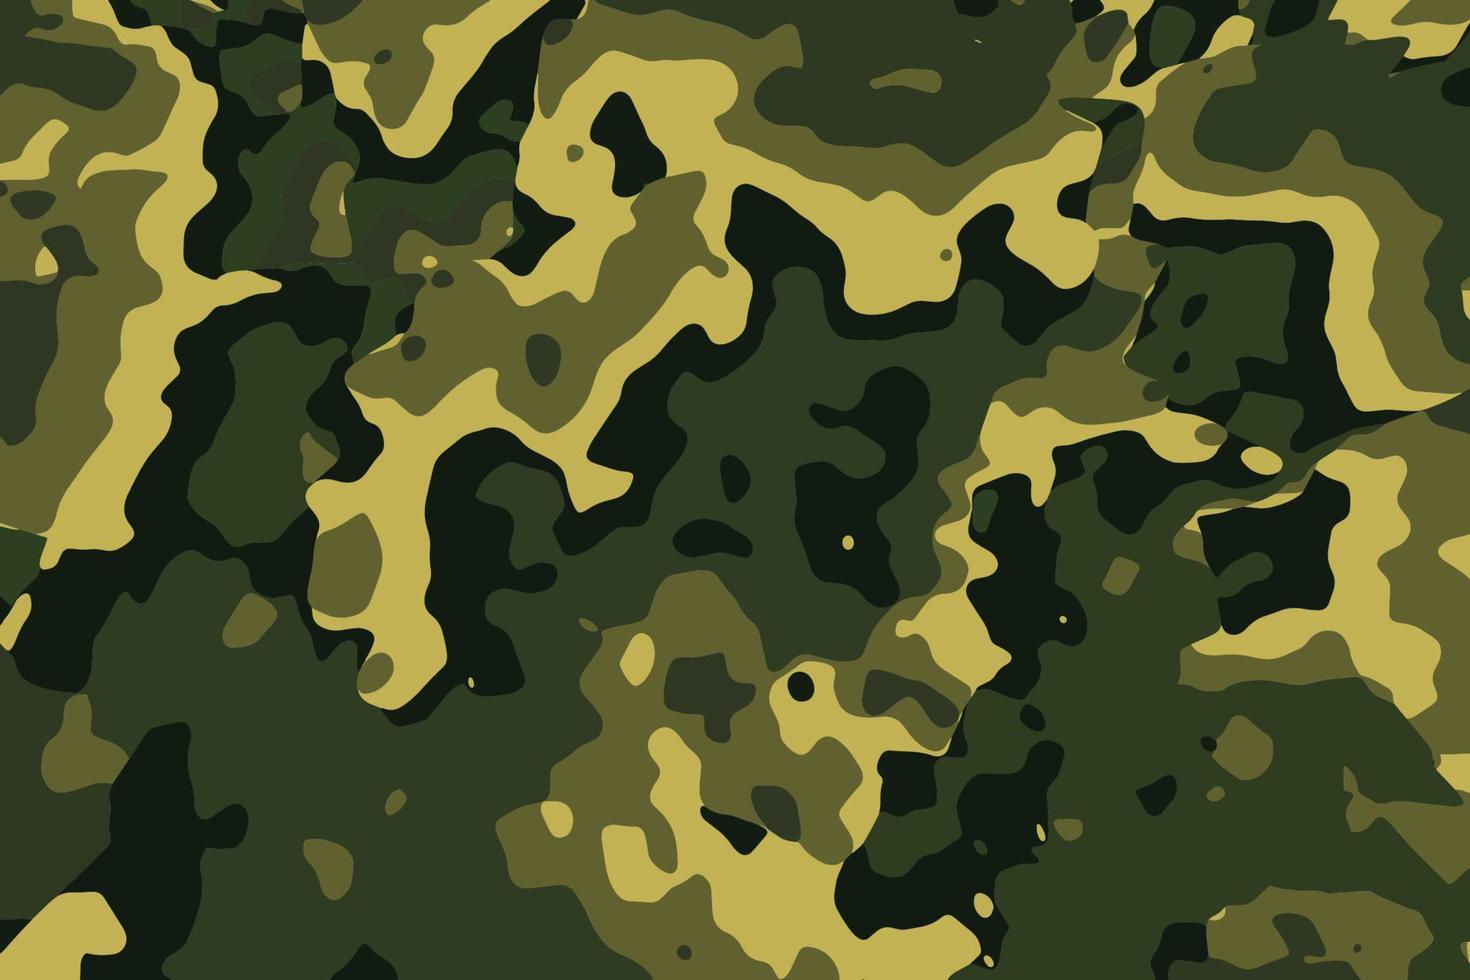 klassisk kamouflage militär bakgrund. abstrakt grön camo textur i skog stil. armé kläder mönster i khaki färger vektor